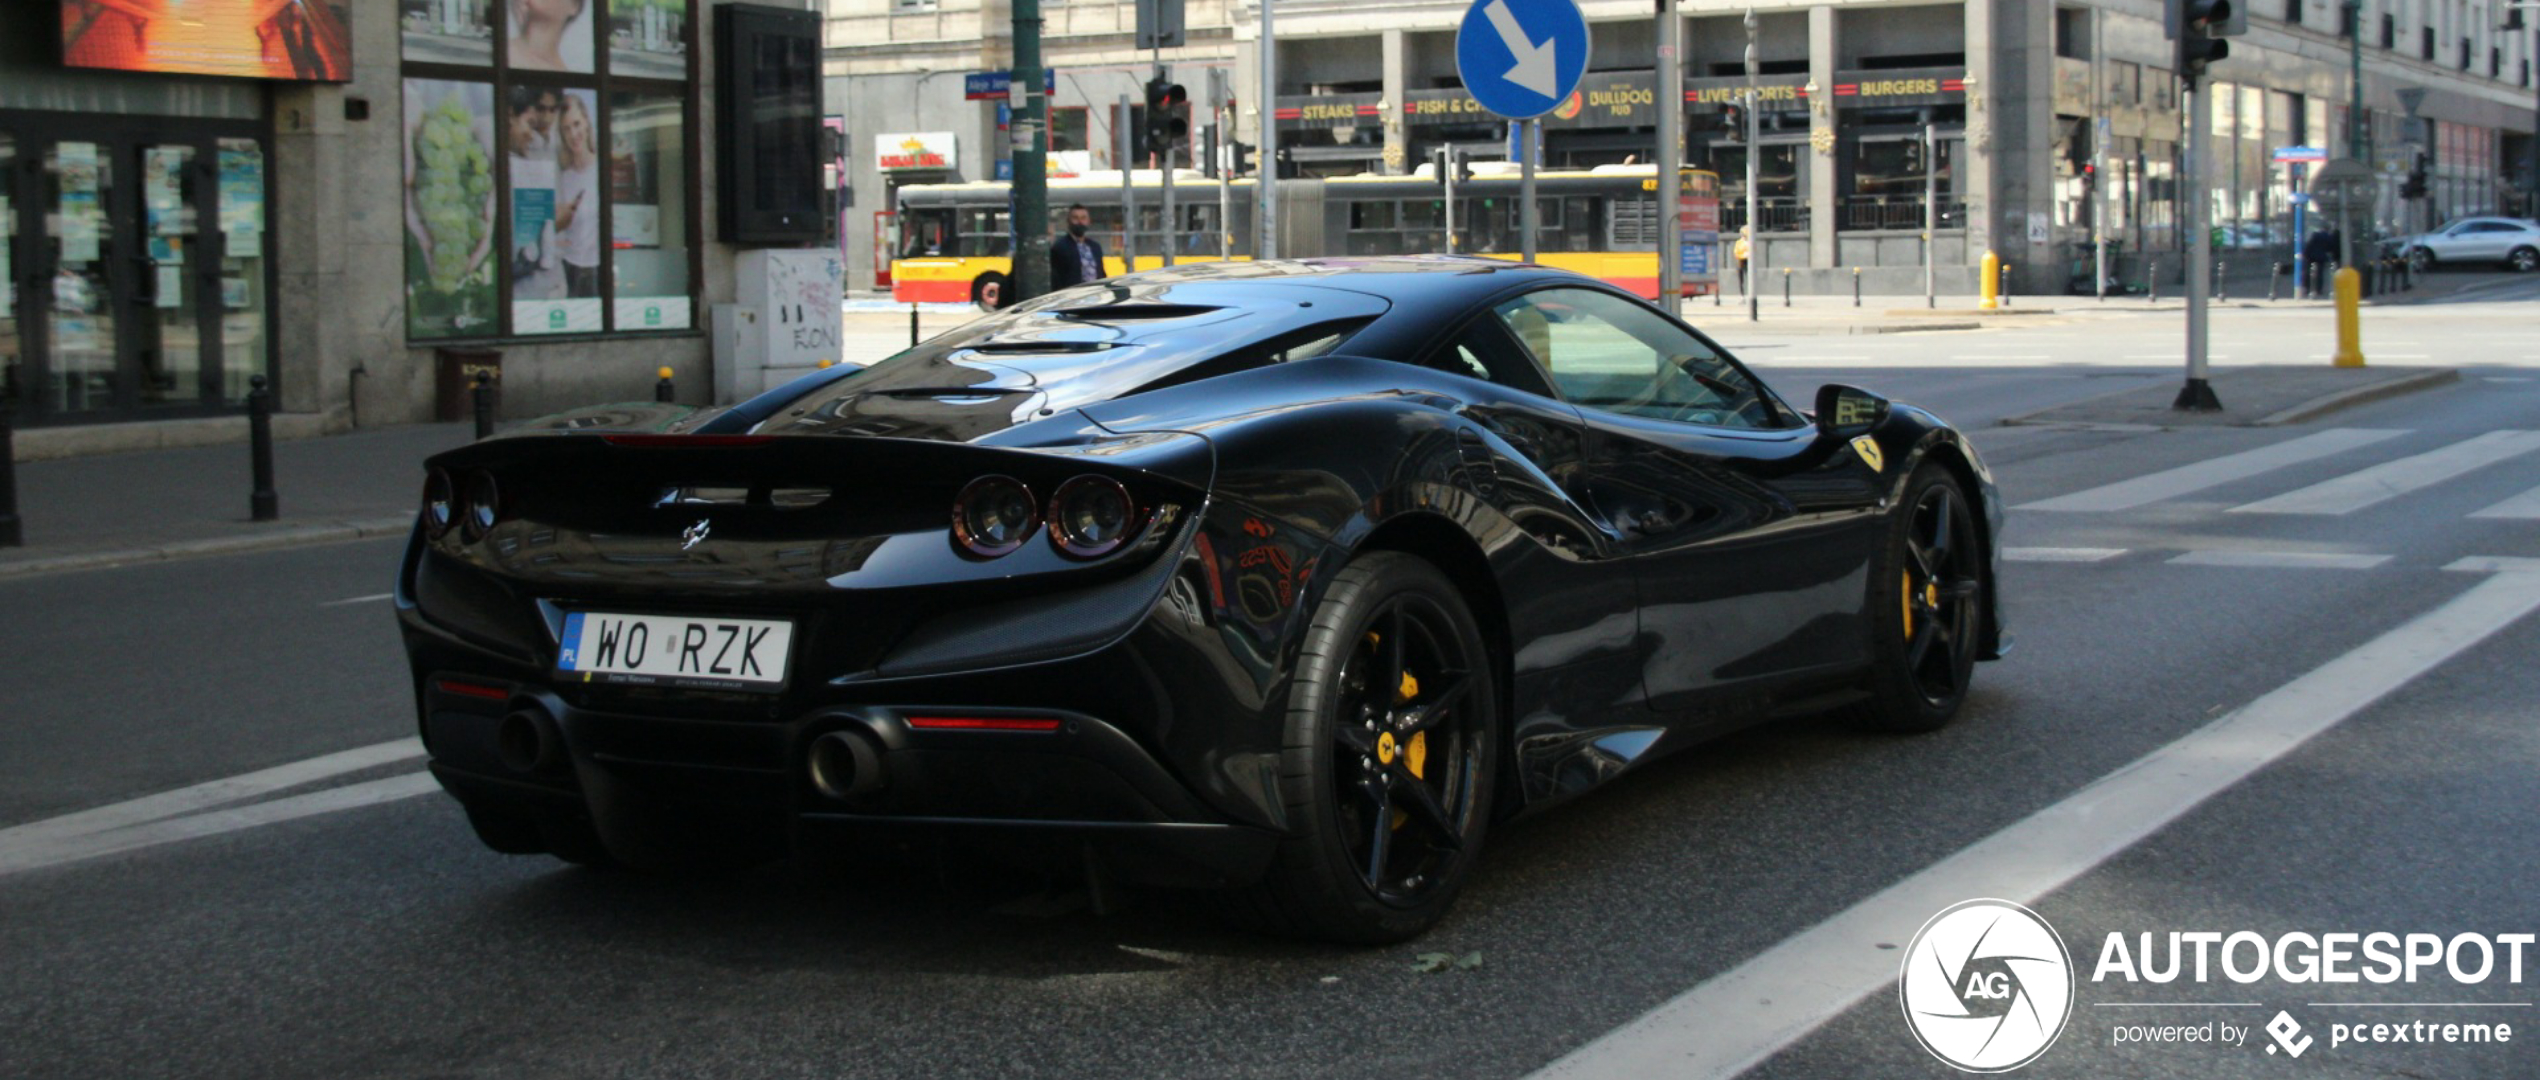 Volledig zwarte Ferrari F8 Tributo is bloedmooi